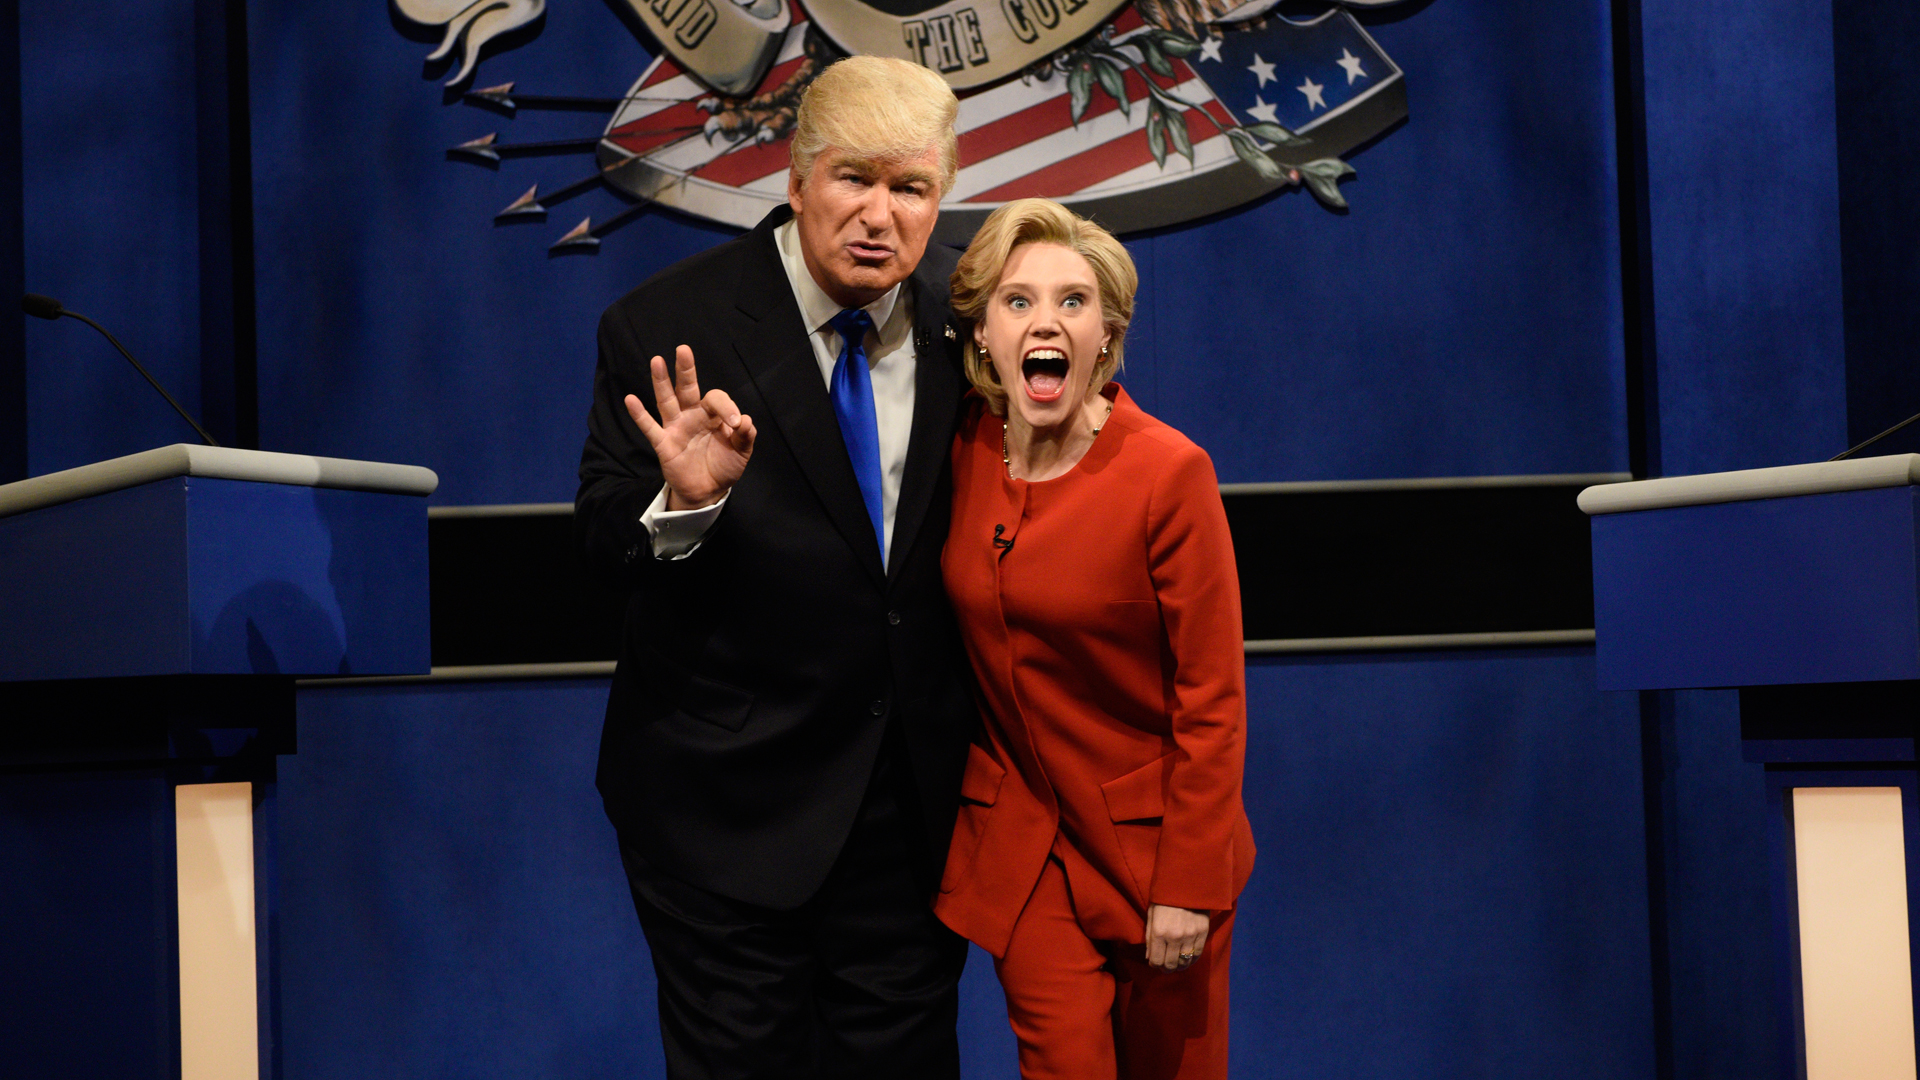 Watch Donald Trump vs. Hillary Clinton Debate Cold Open From Saturday Night Live - NBC.com